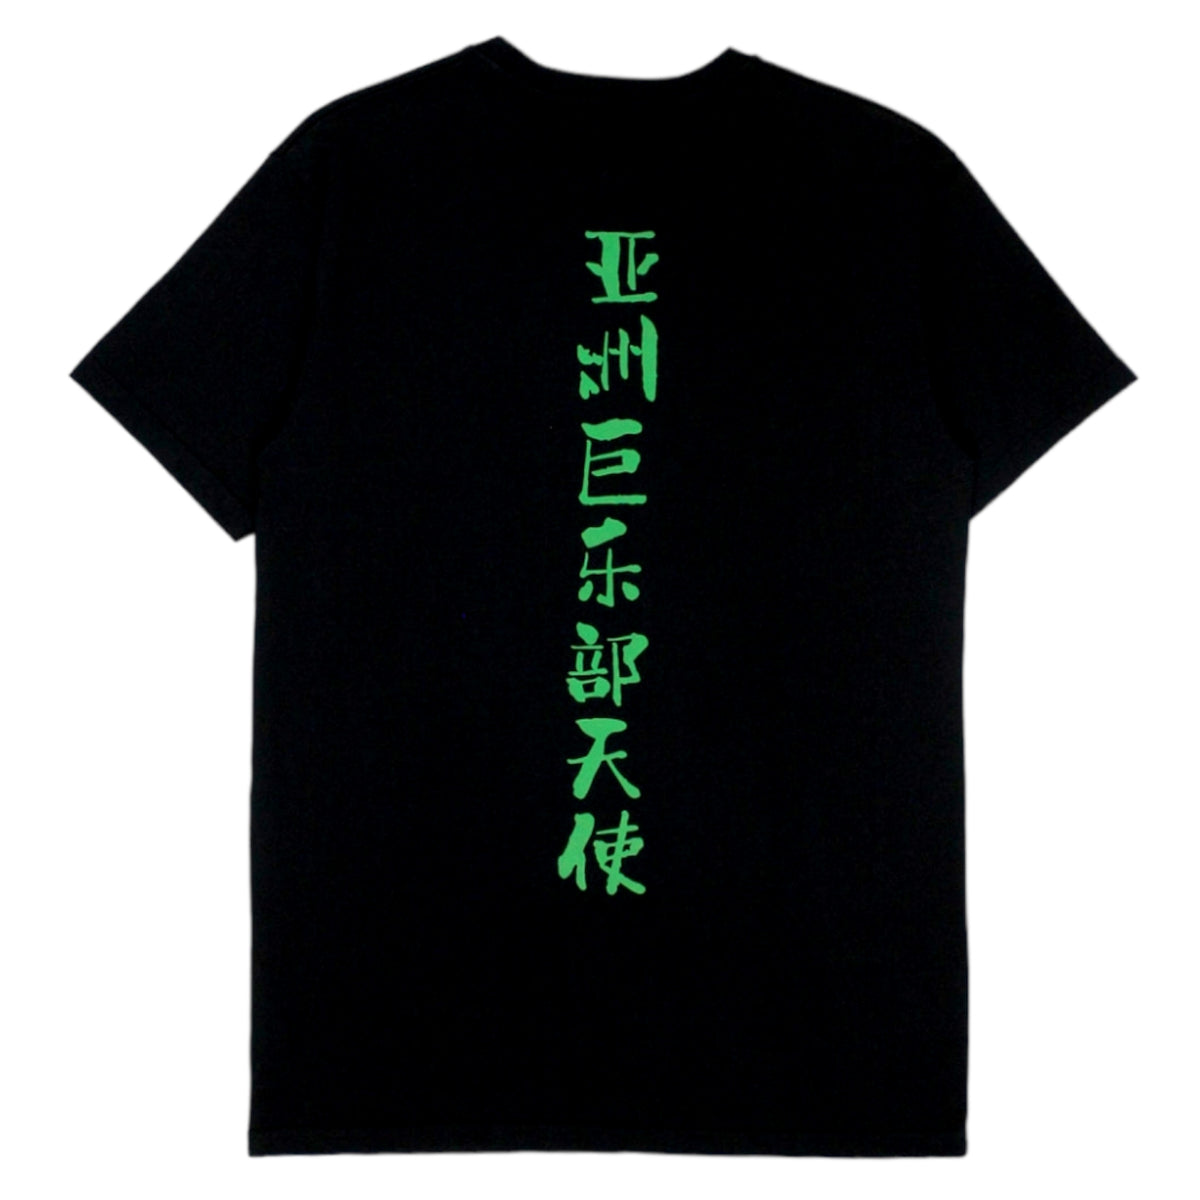 Boiler Room Black Acid Cherub T-Shirt